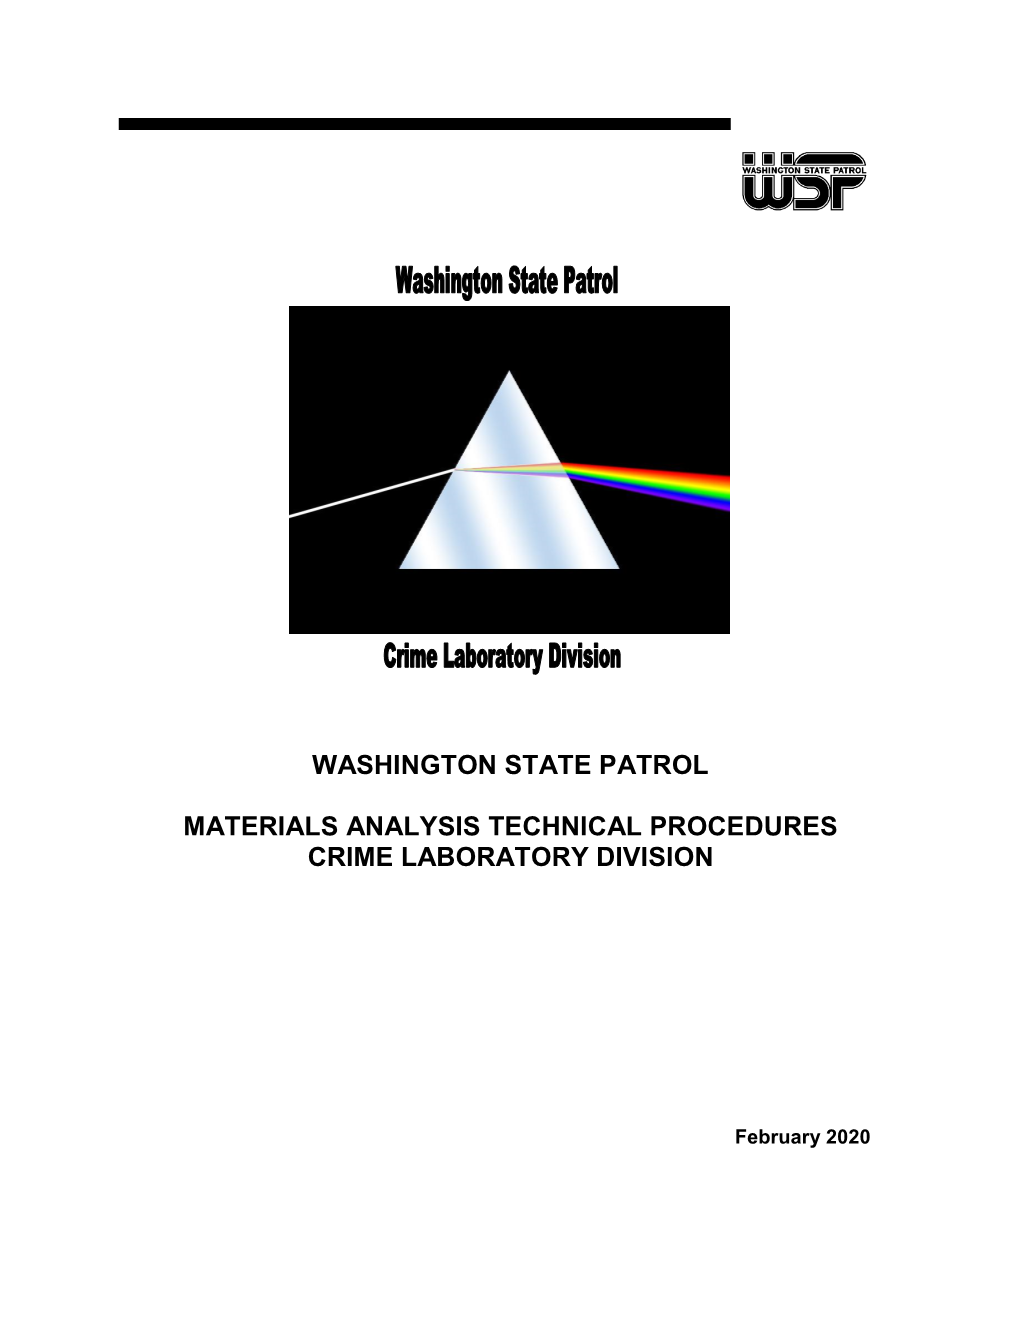 Washington State Patrol Materials Analysis